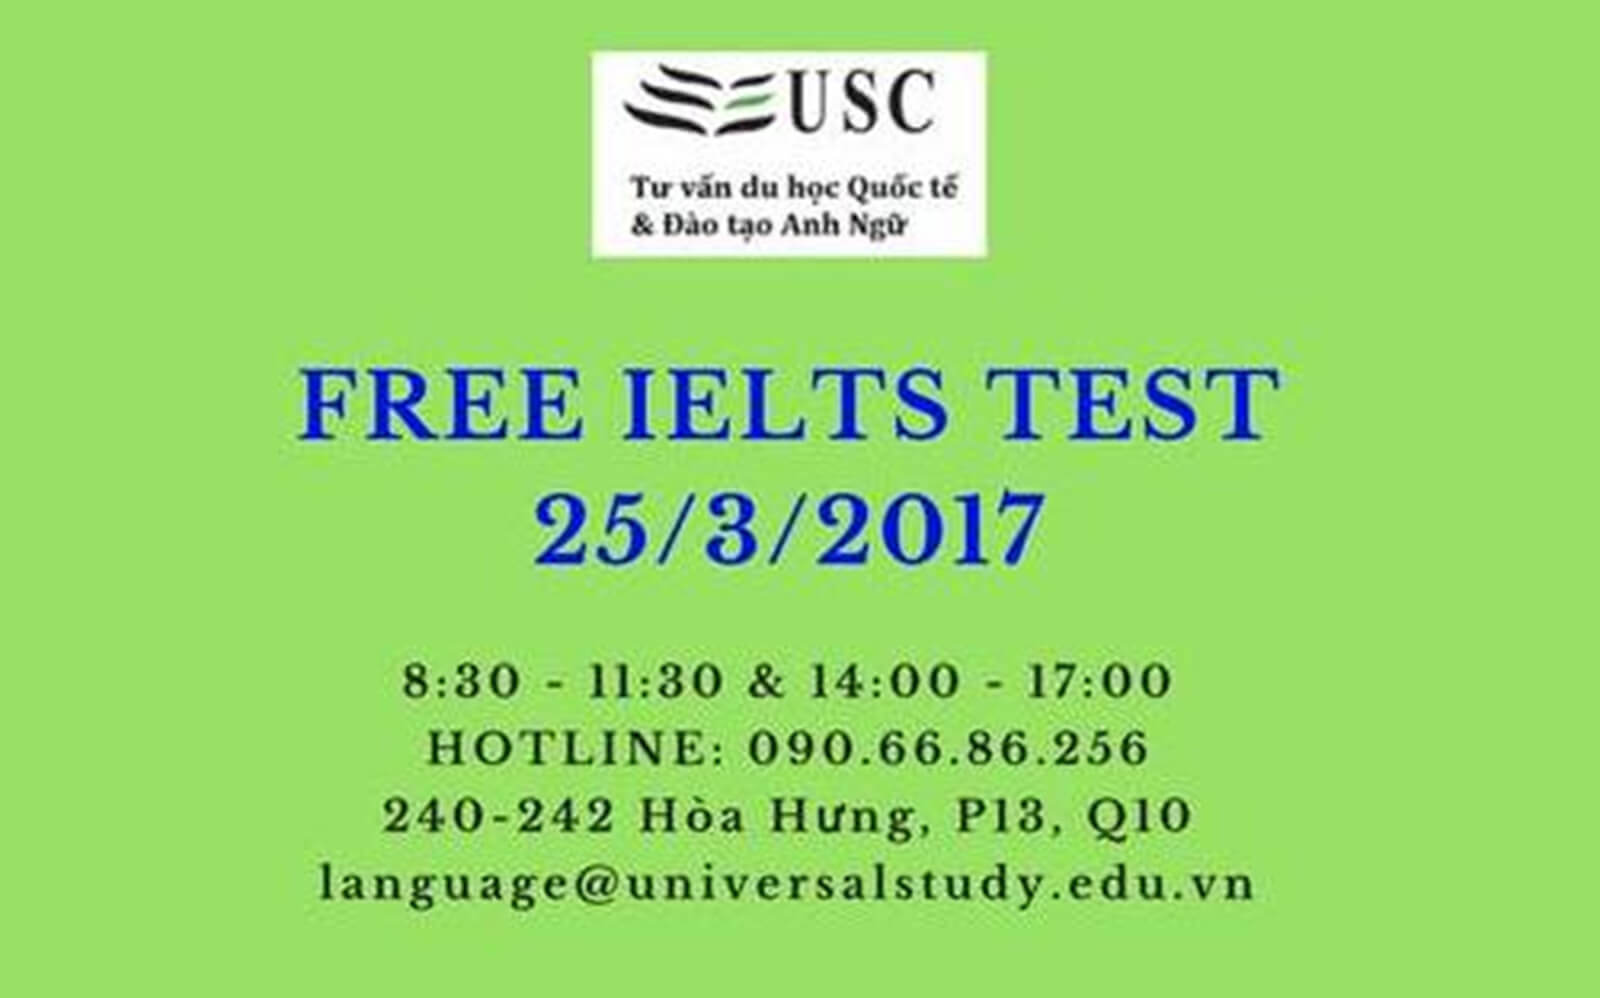 FREE IELTS TEST EVENT Saturday, 25 March, 2017